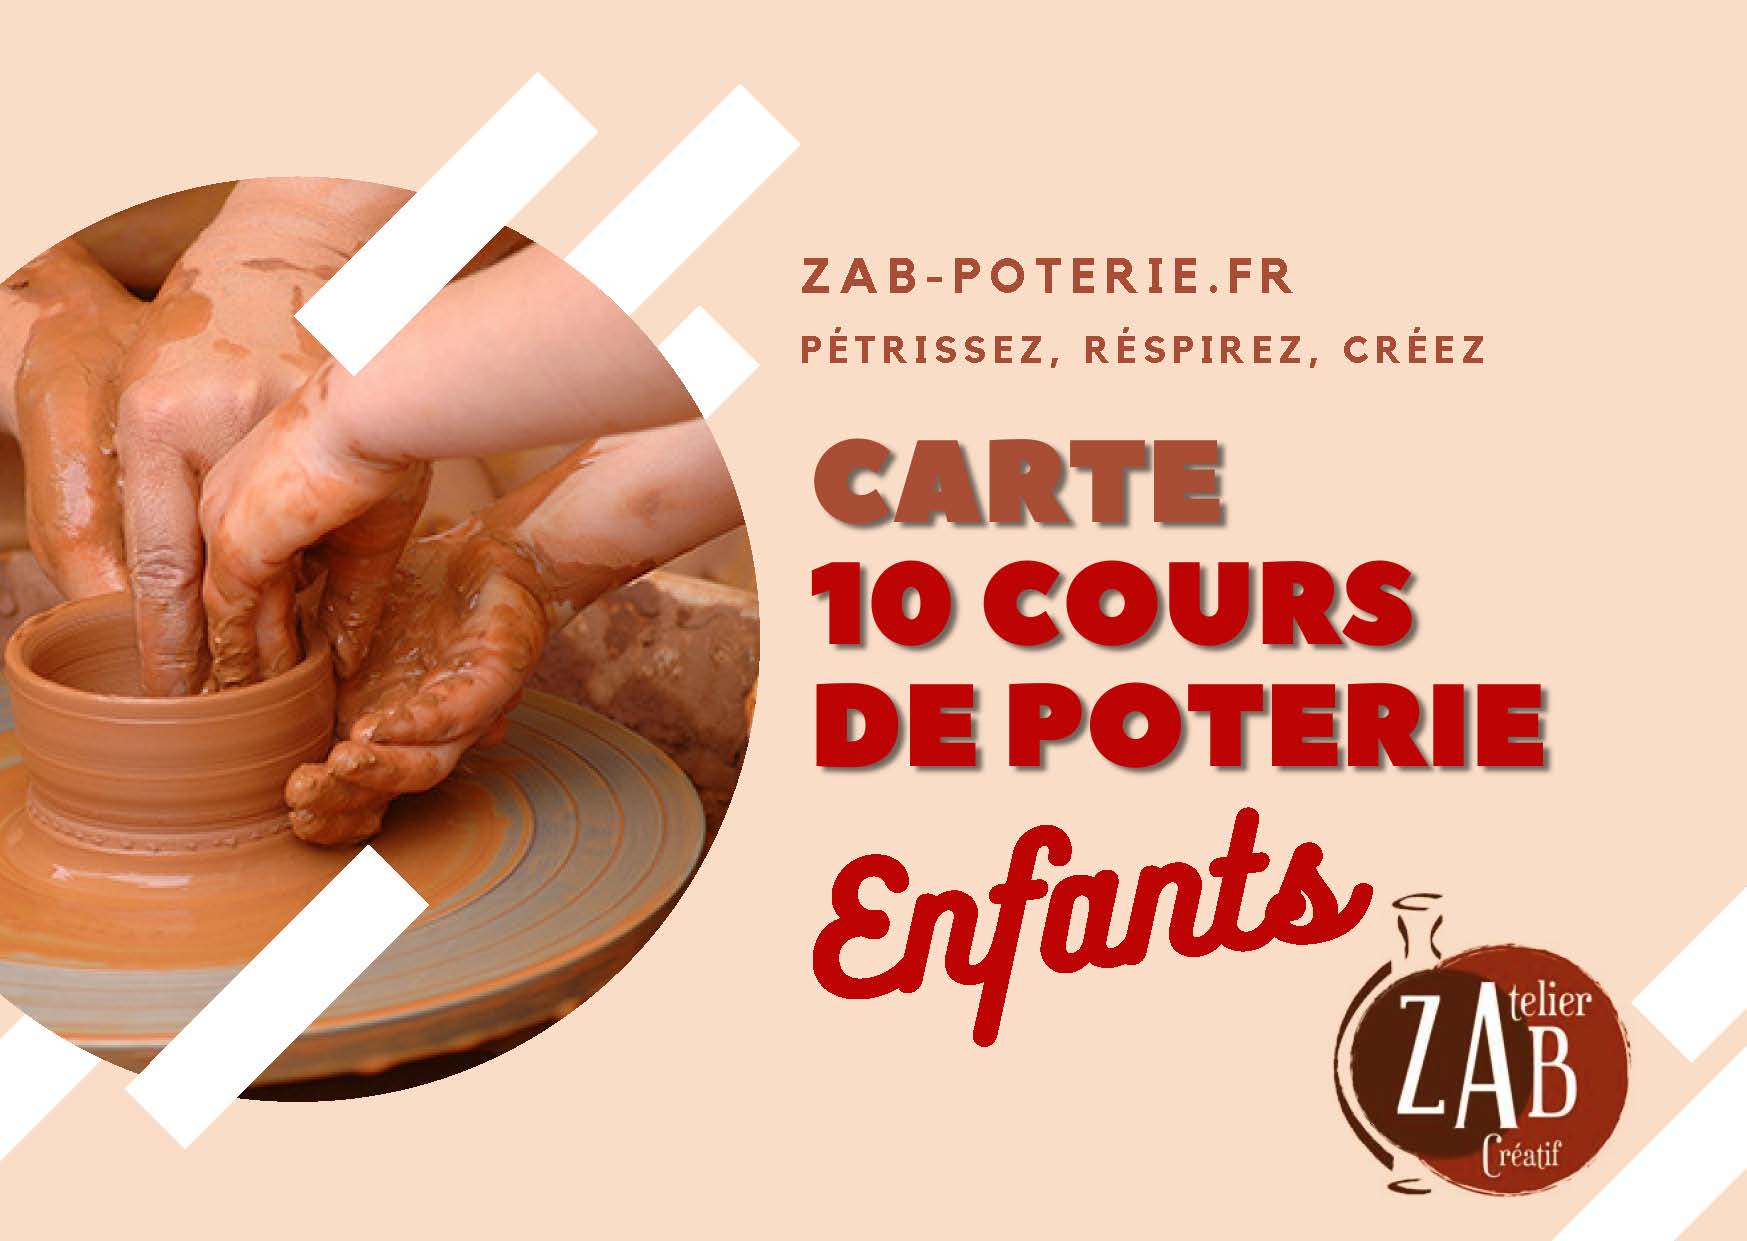 https://www.stage-poterie-occitanie.com/wp-content/uploads/2021/10/Carte-10-cours-poterie-enfants-zab-poterie-_Page_1.jpg